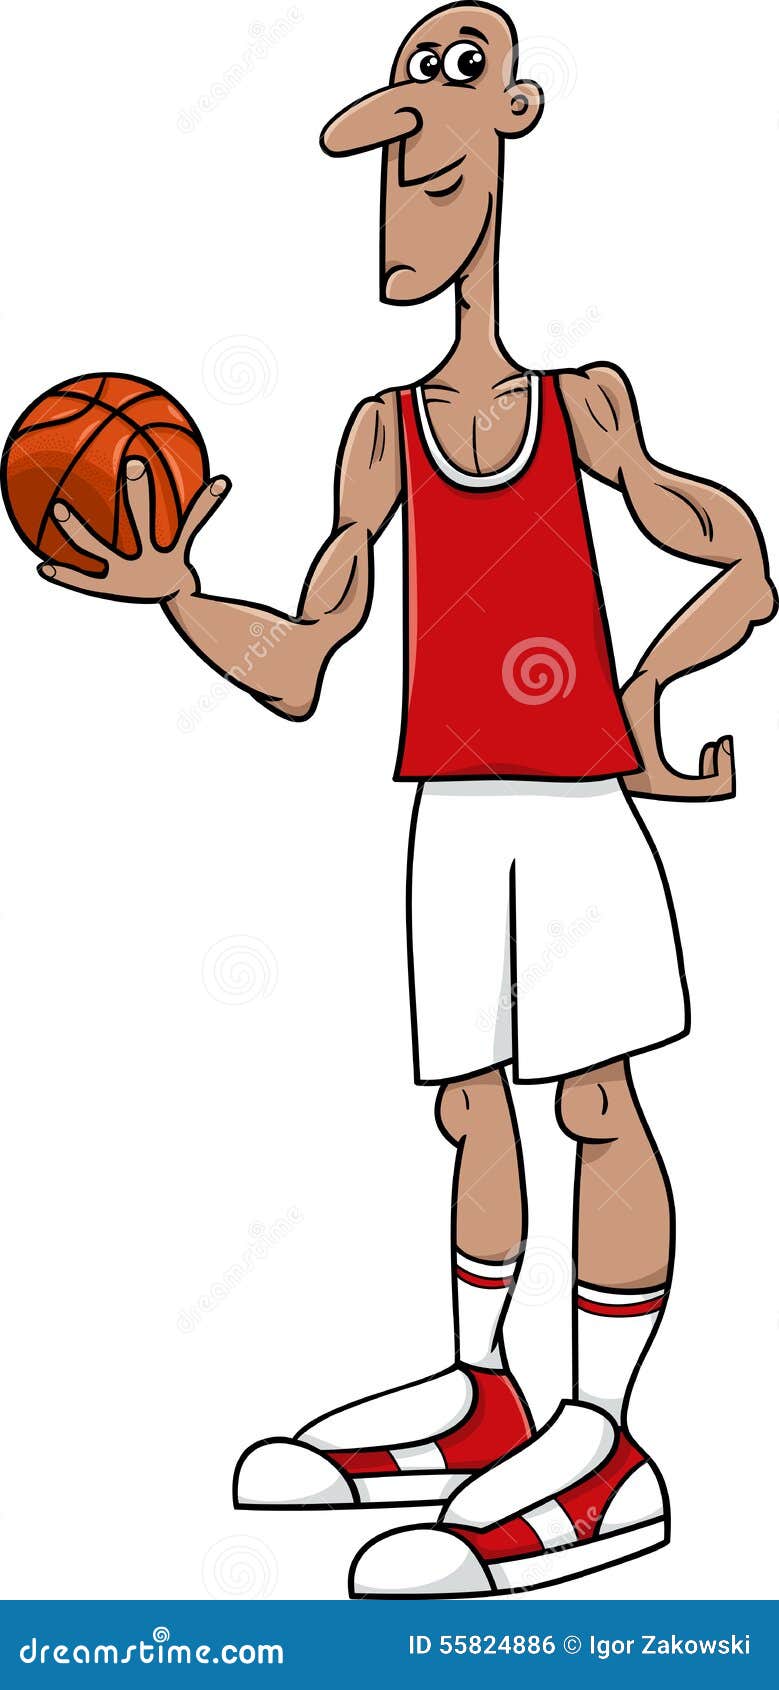 Basketball Player Cartoon Illustration Stock Vector - Image: 55824886